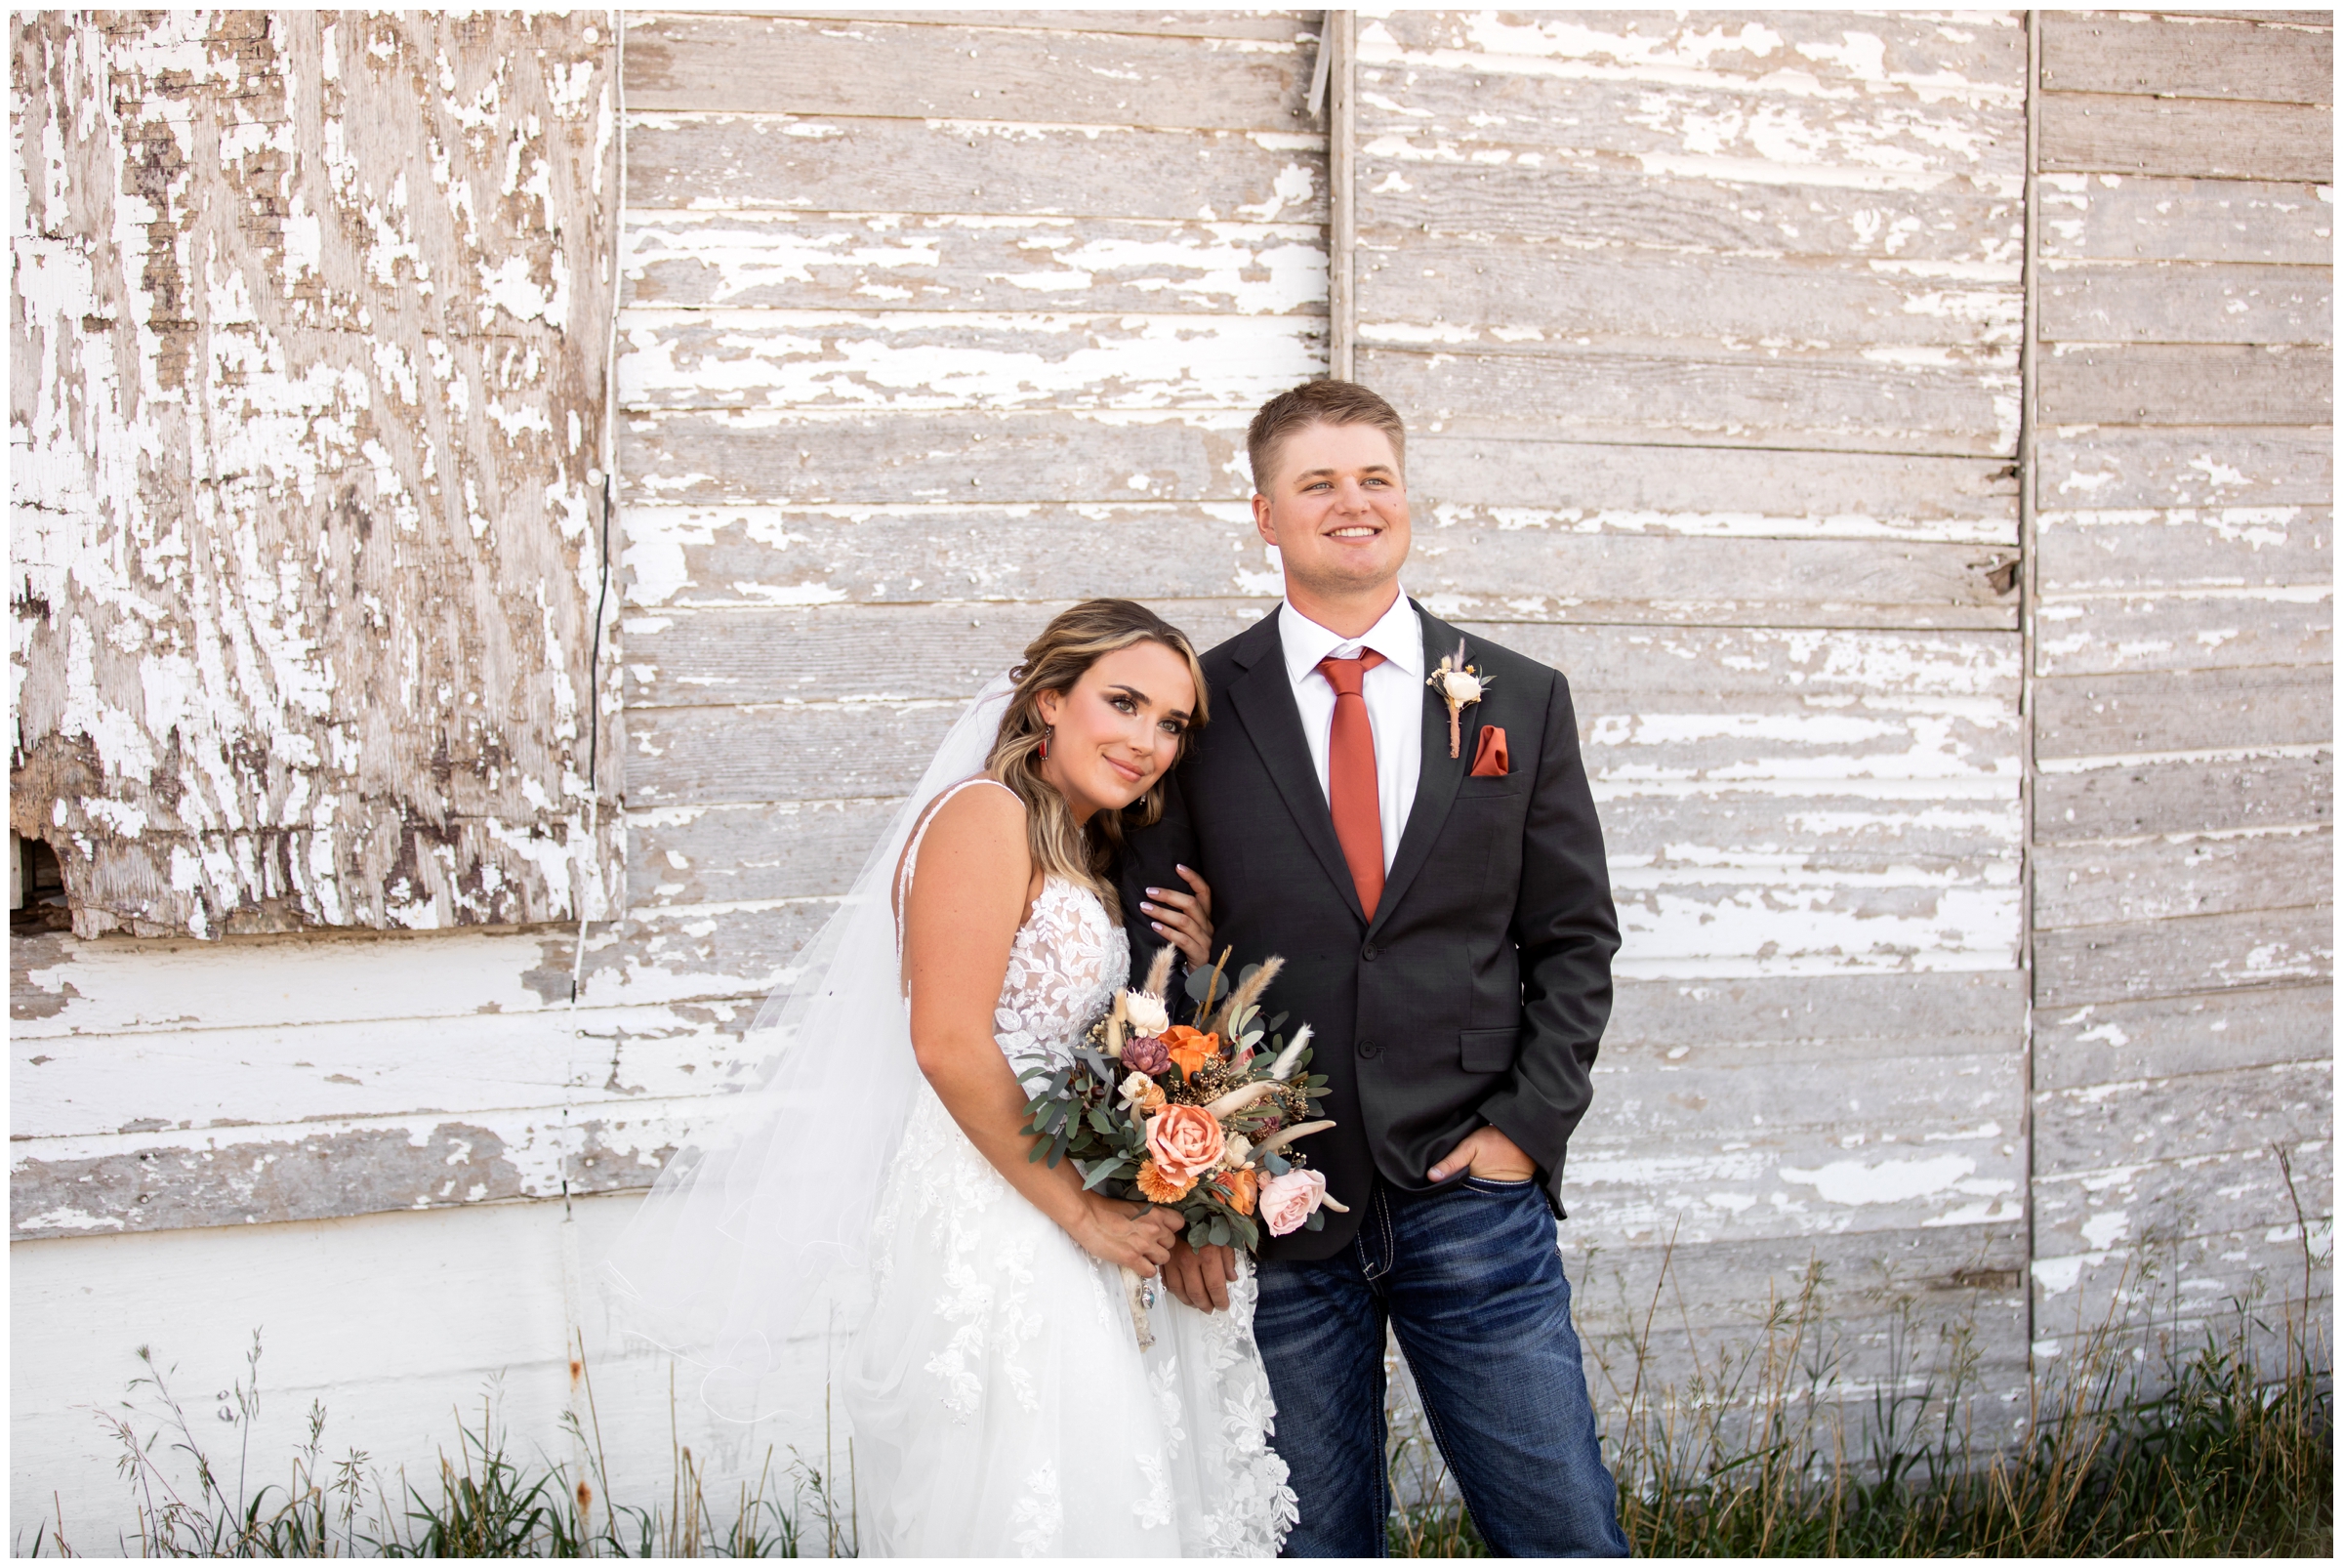 Haxtun Colorado wedding photos by Northern CO photographer Plum Pretty Photography